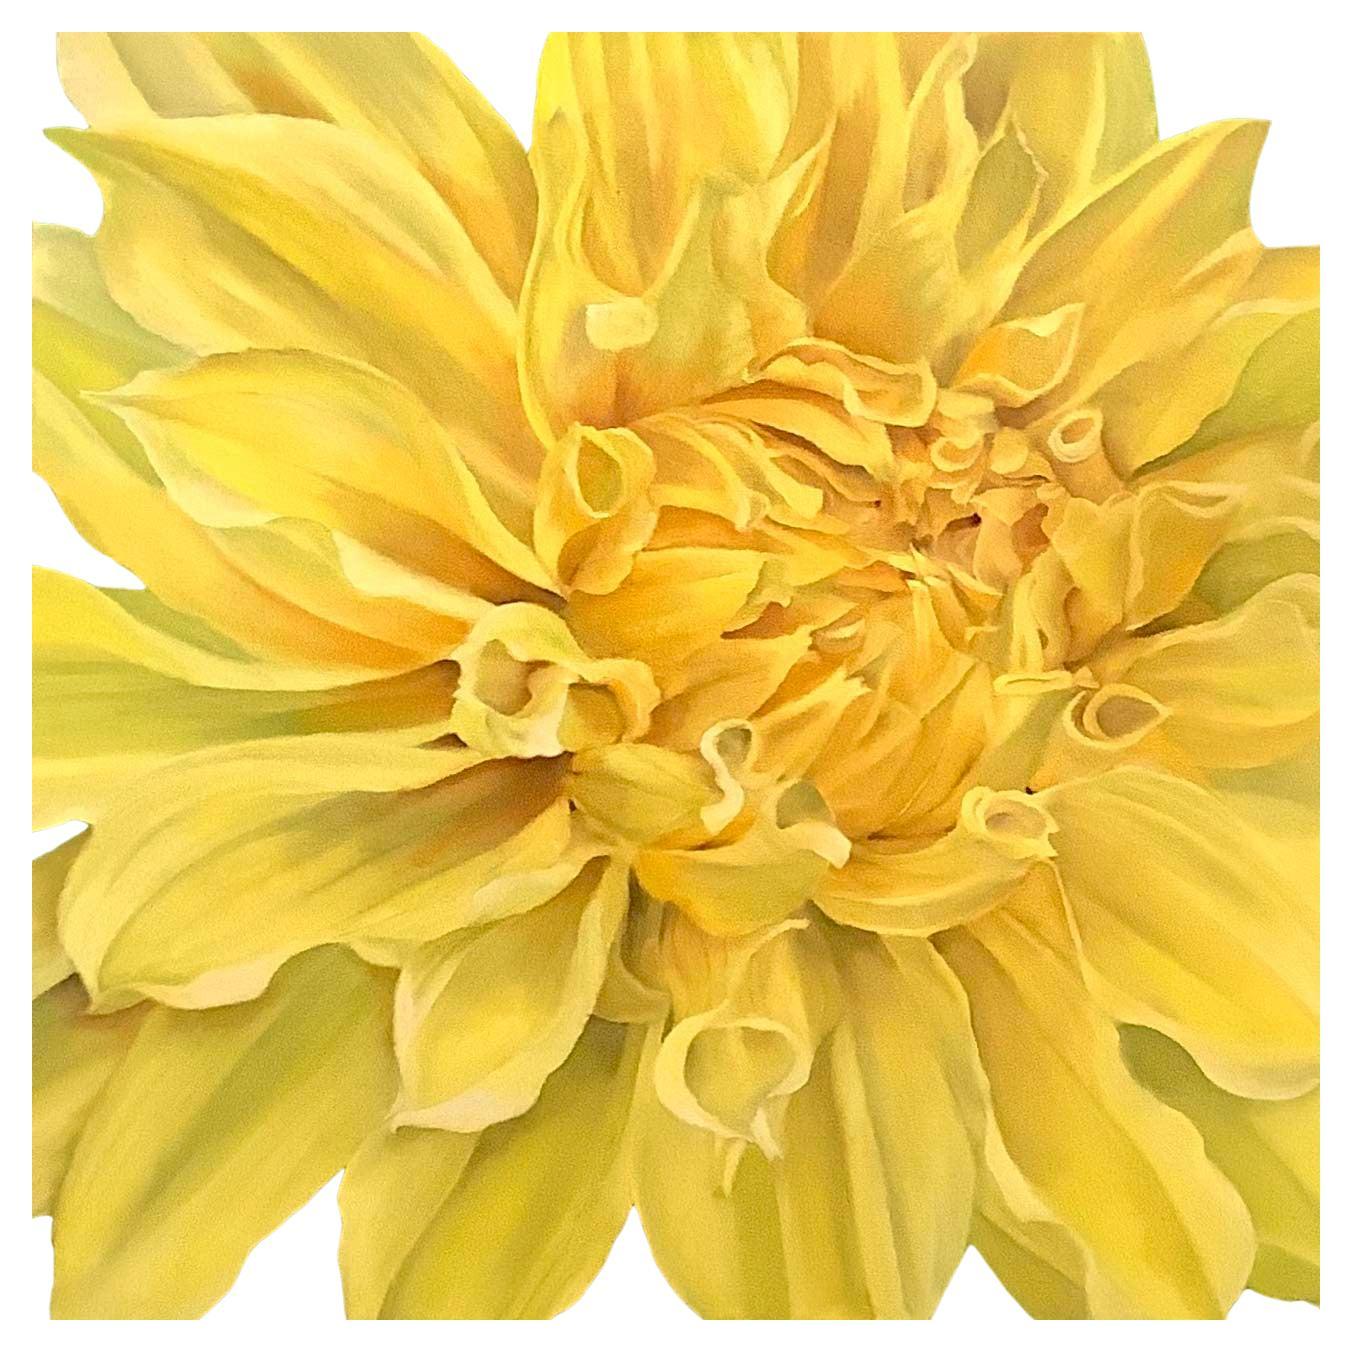 Framed Oil on Canvas "Delia" - Delilah Flower by Shelly Gurton